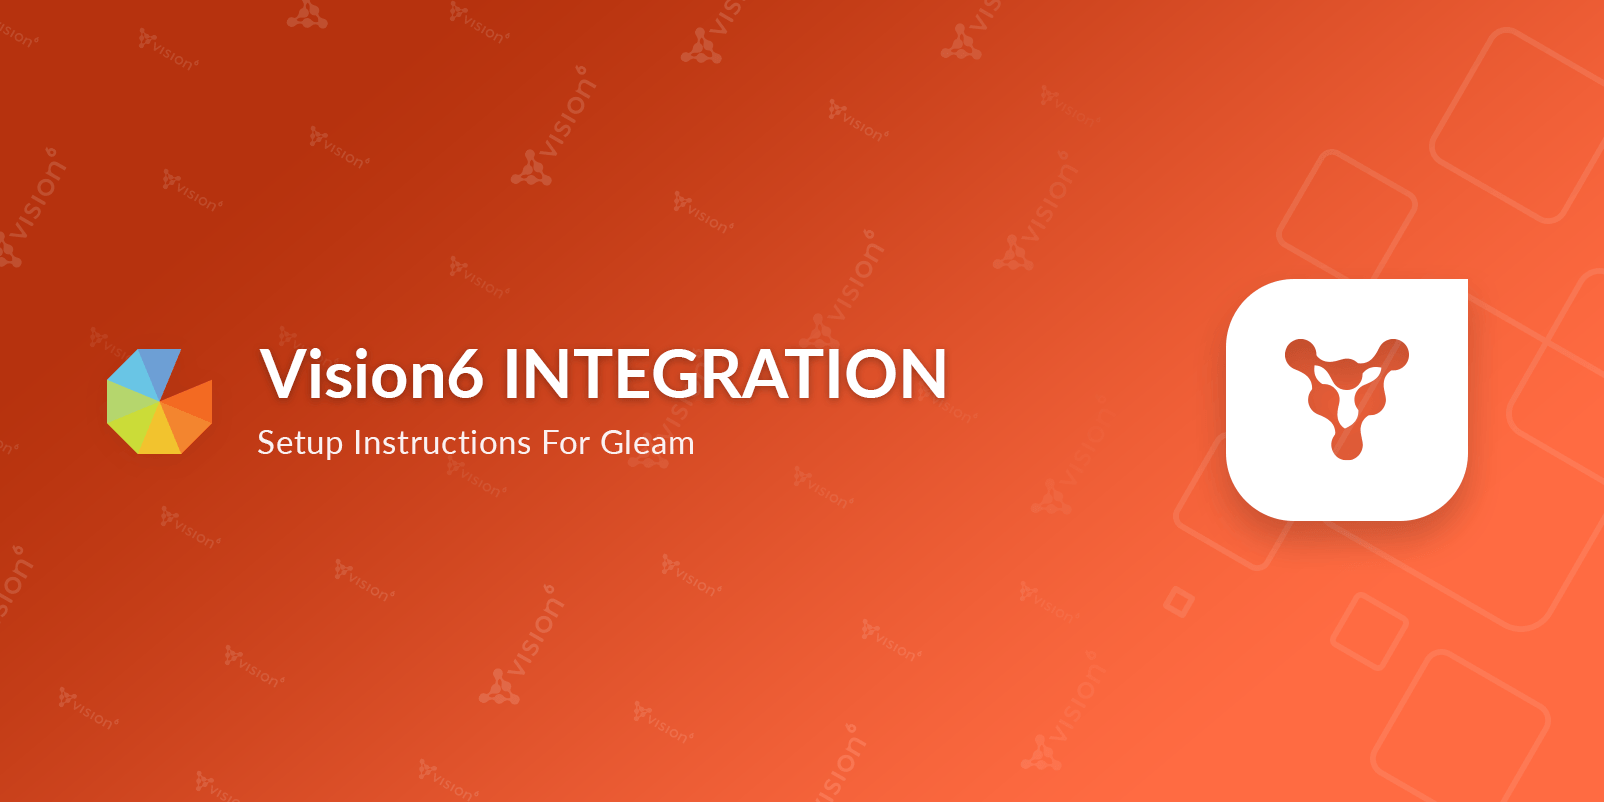 Vision6 Integration Setup Instructions for Gleam